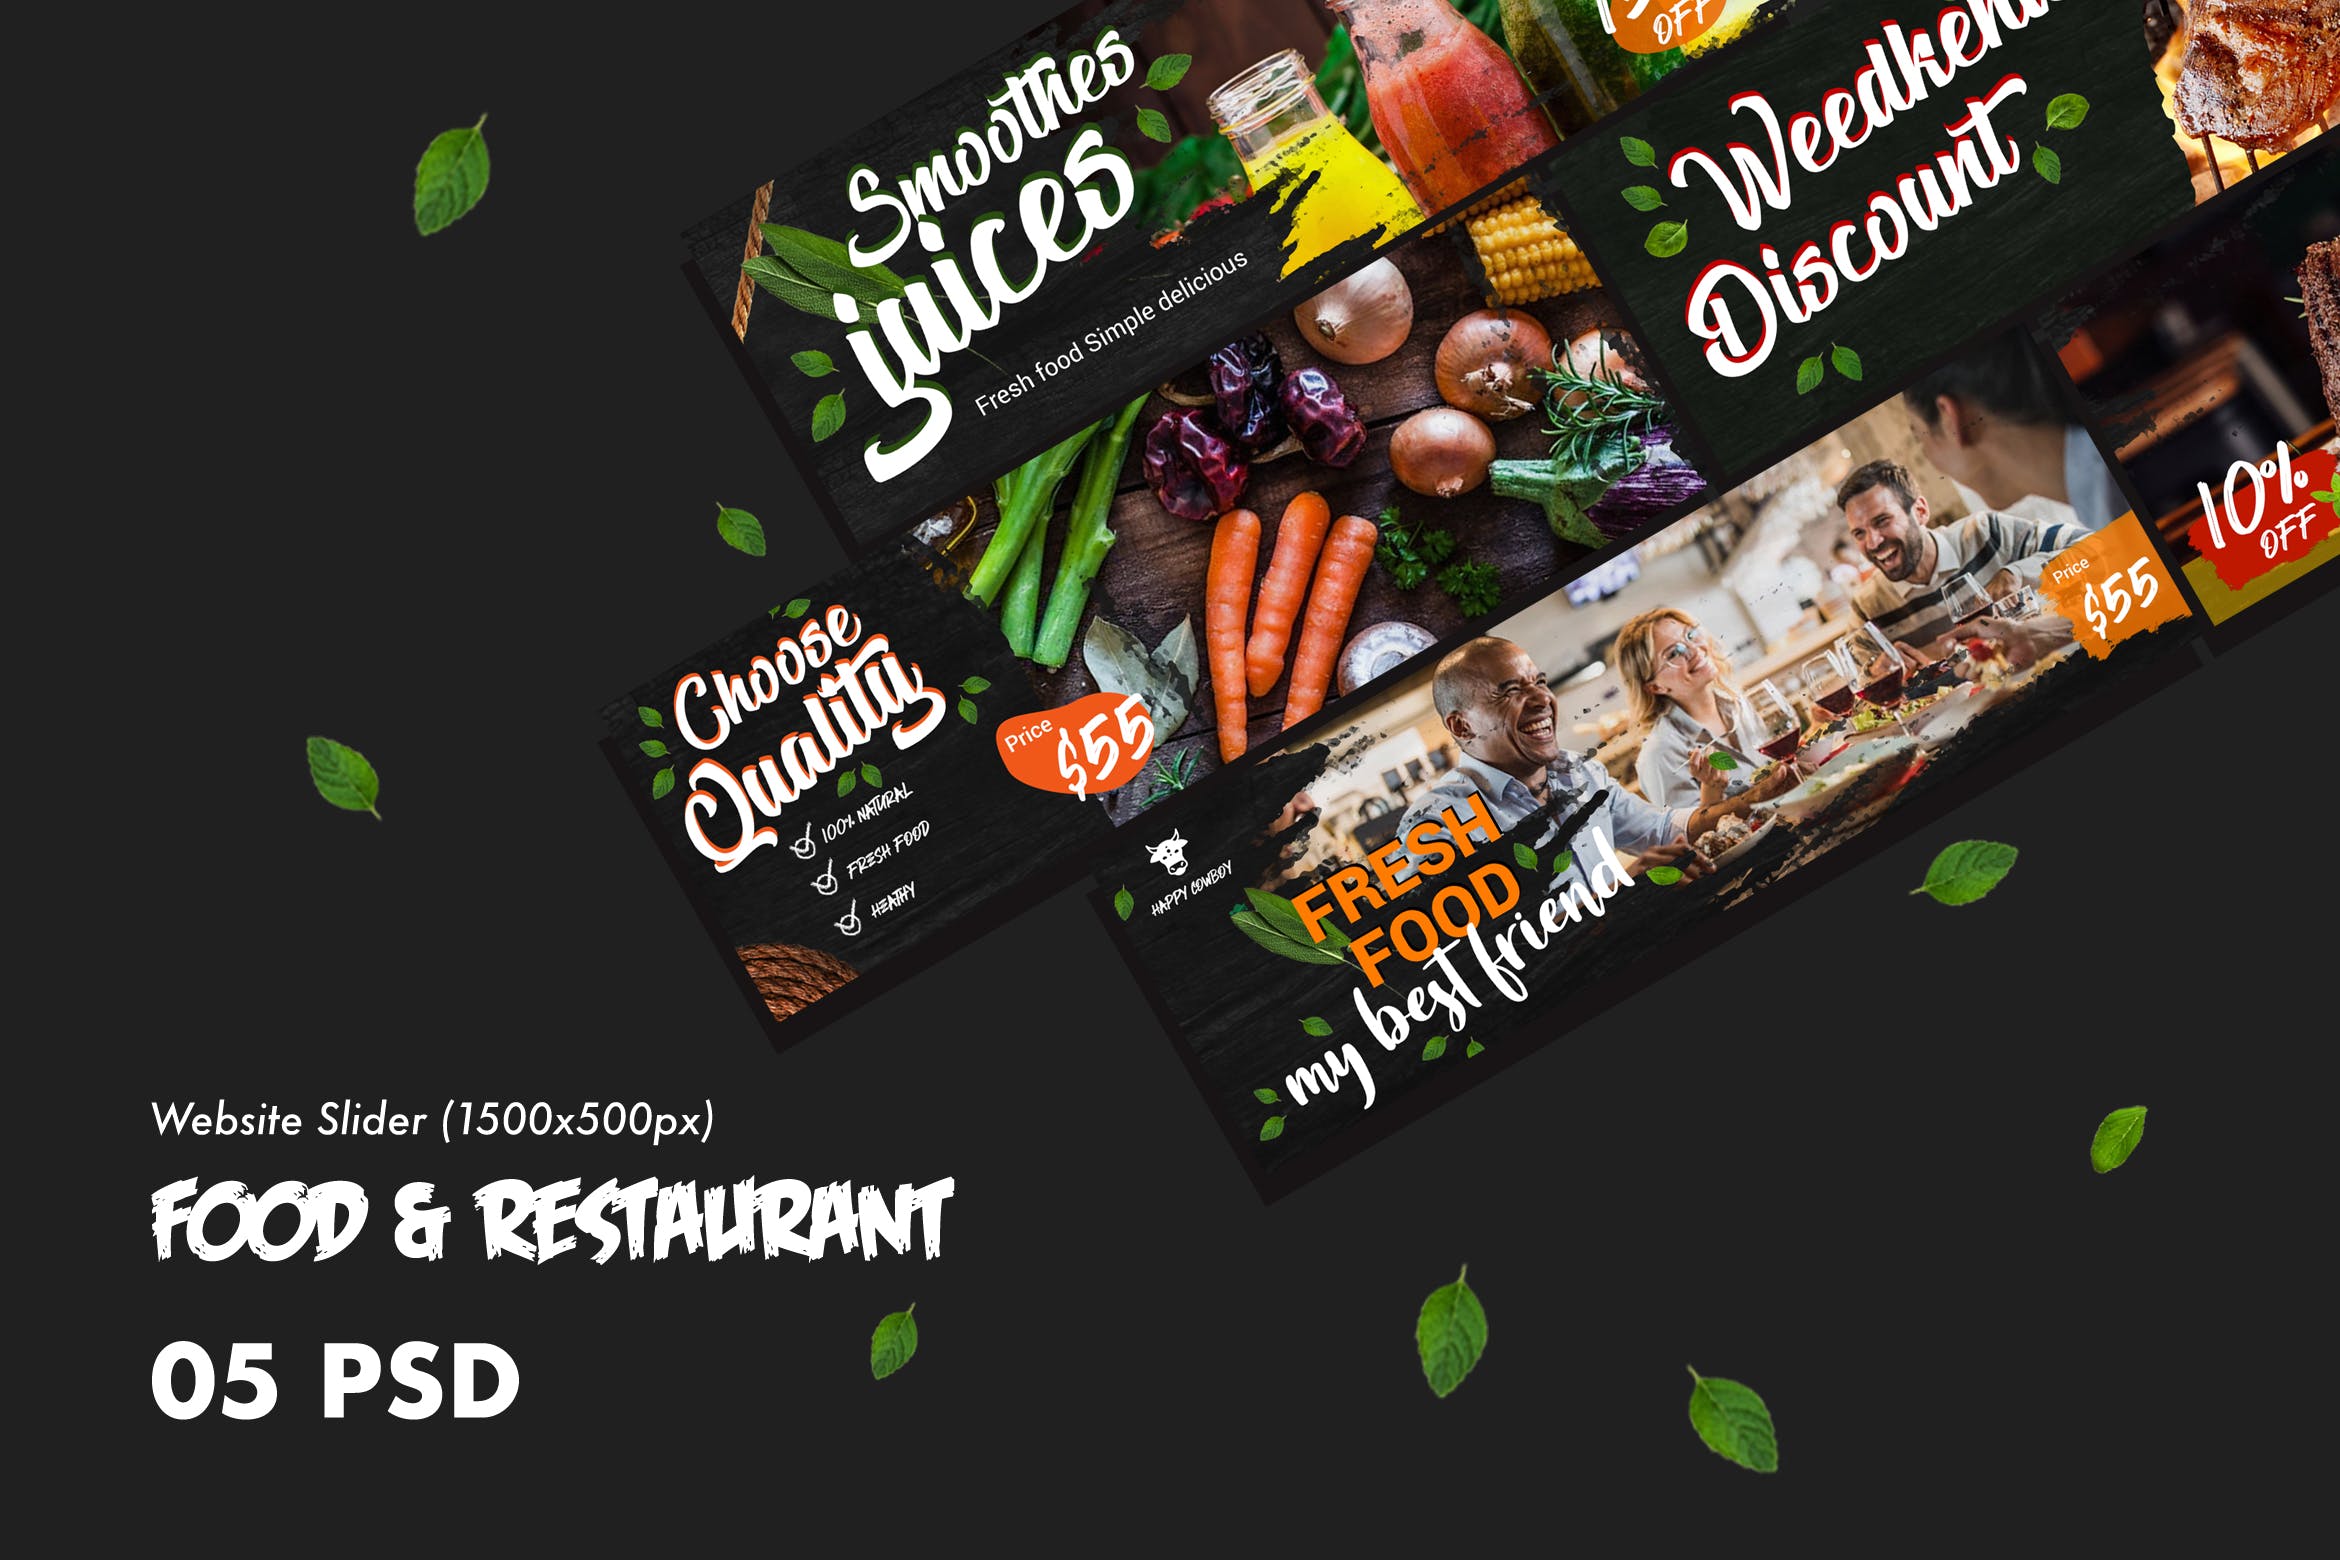 西式美食&餐厅主题网站广告Banner图设计模板 Food & Restaurants Website Slider PSD Template插图